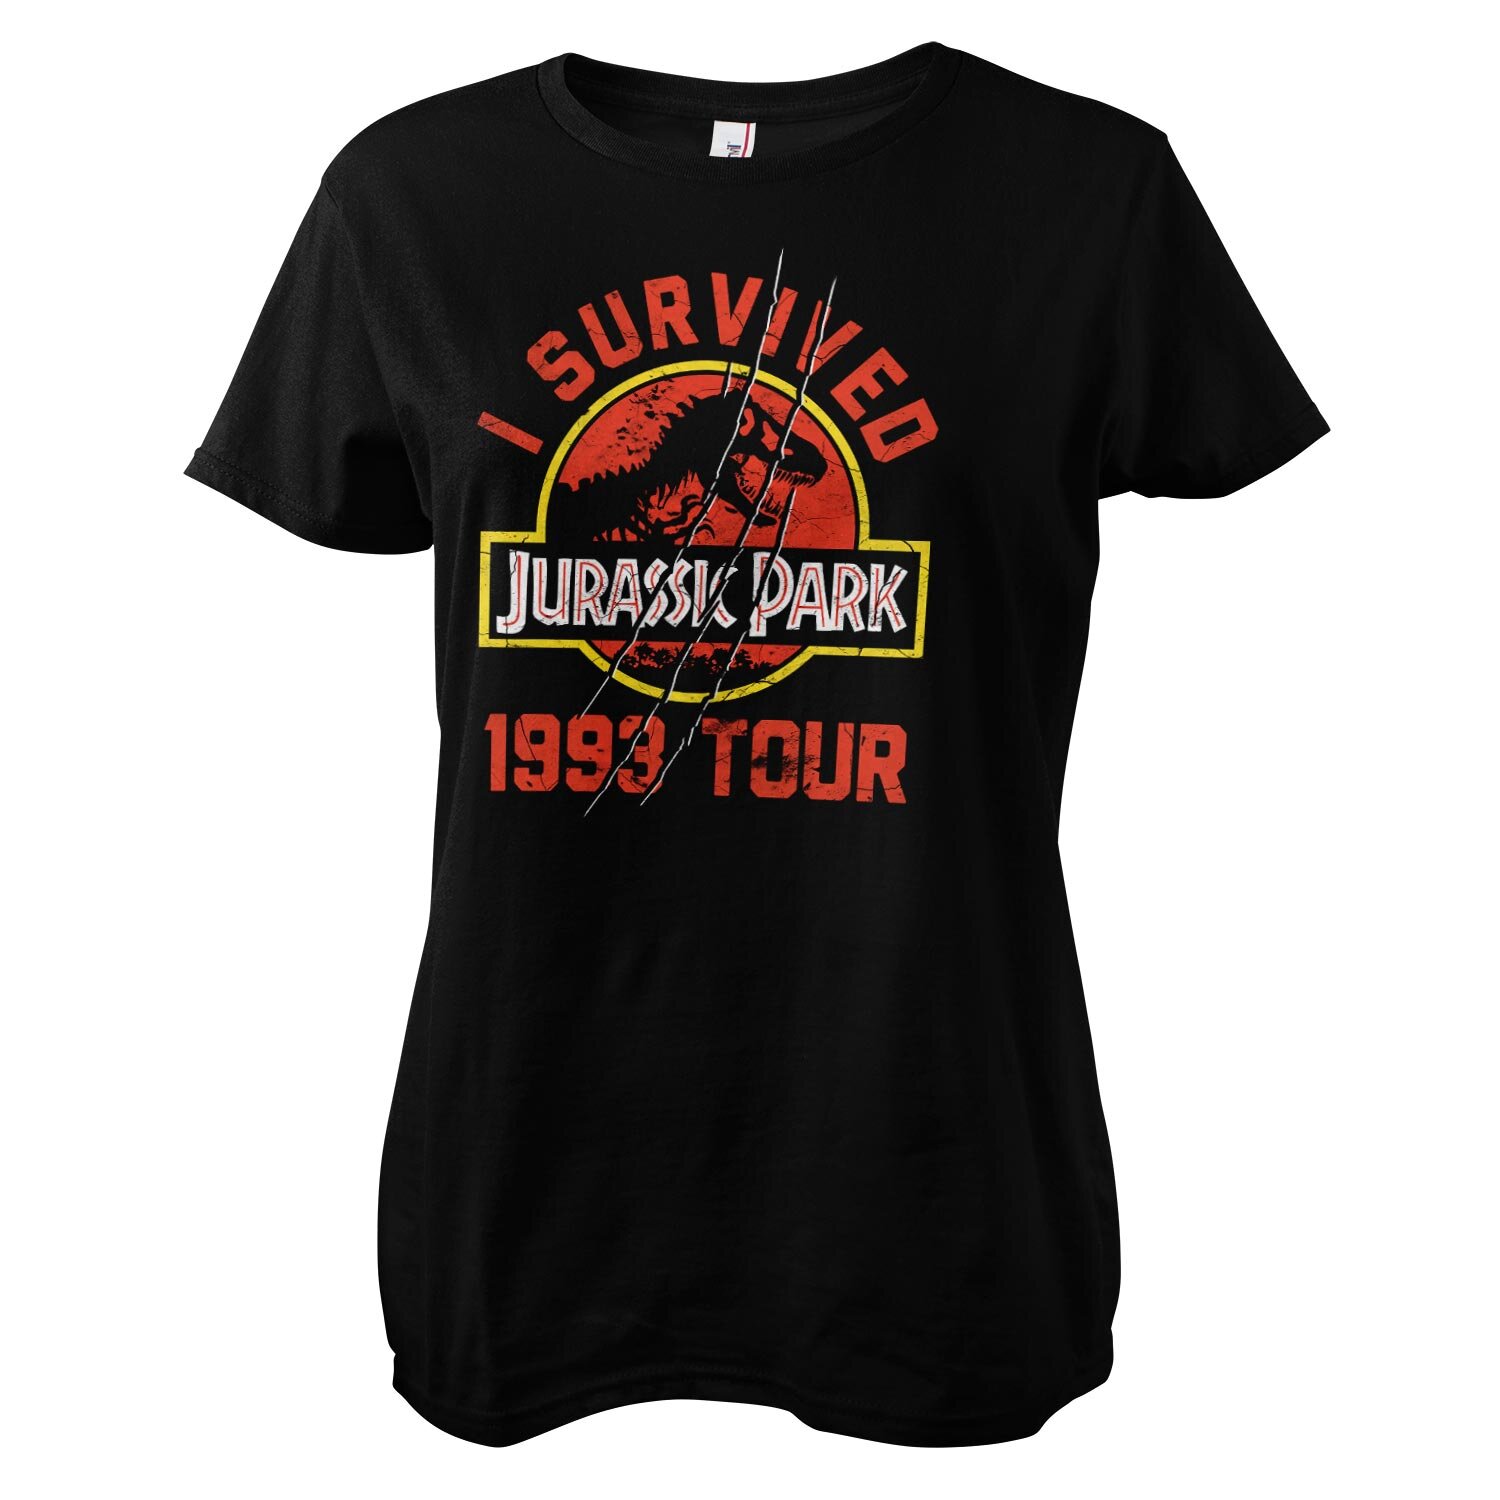 Jurassic Park 1993 Tour Girly Tee